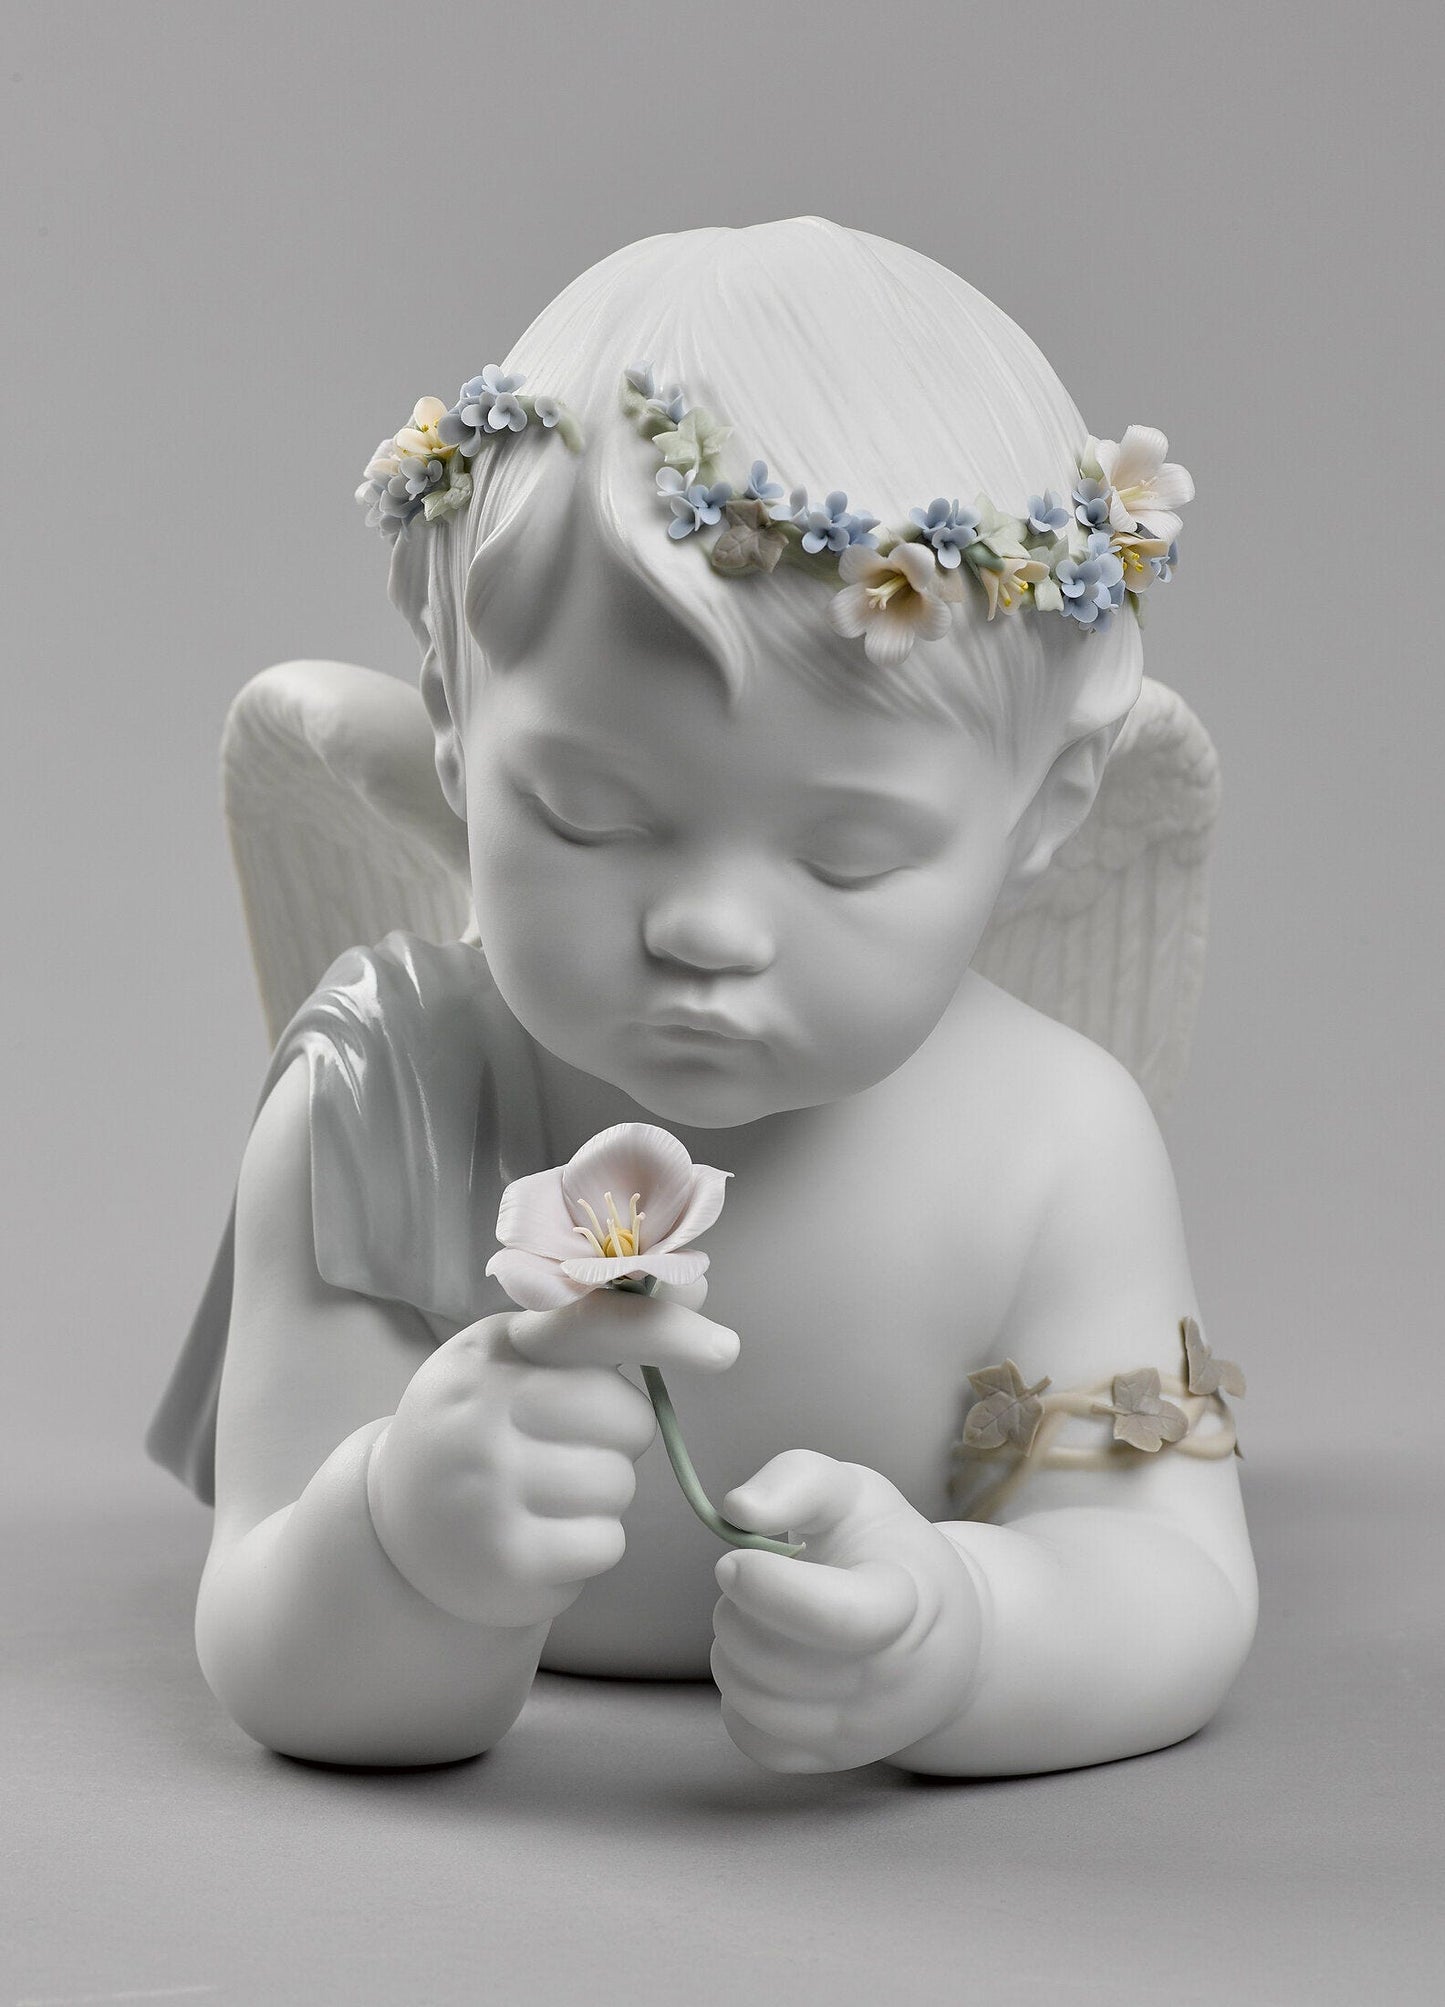 My Loving Angel Figurine